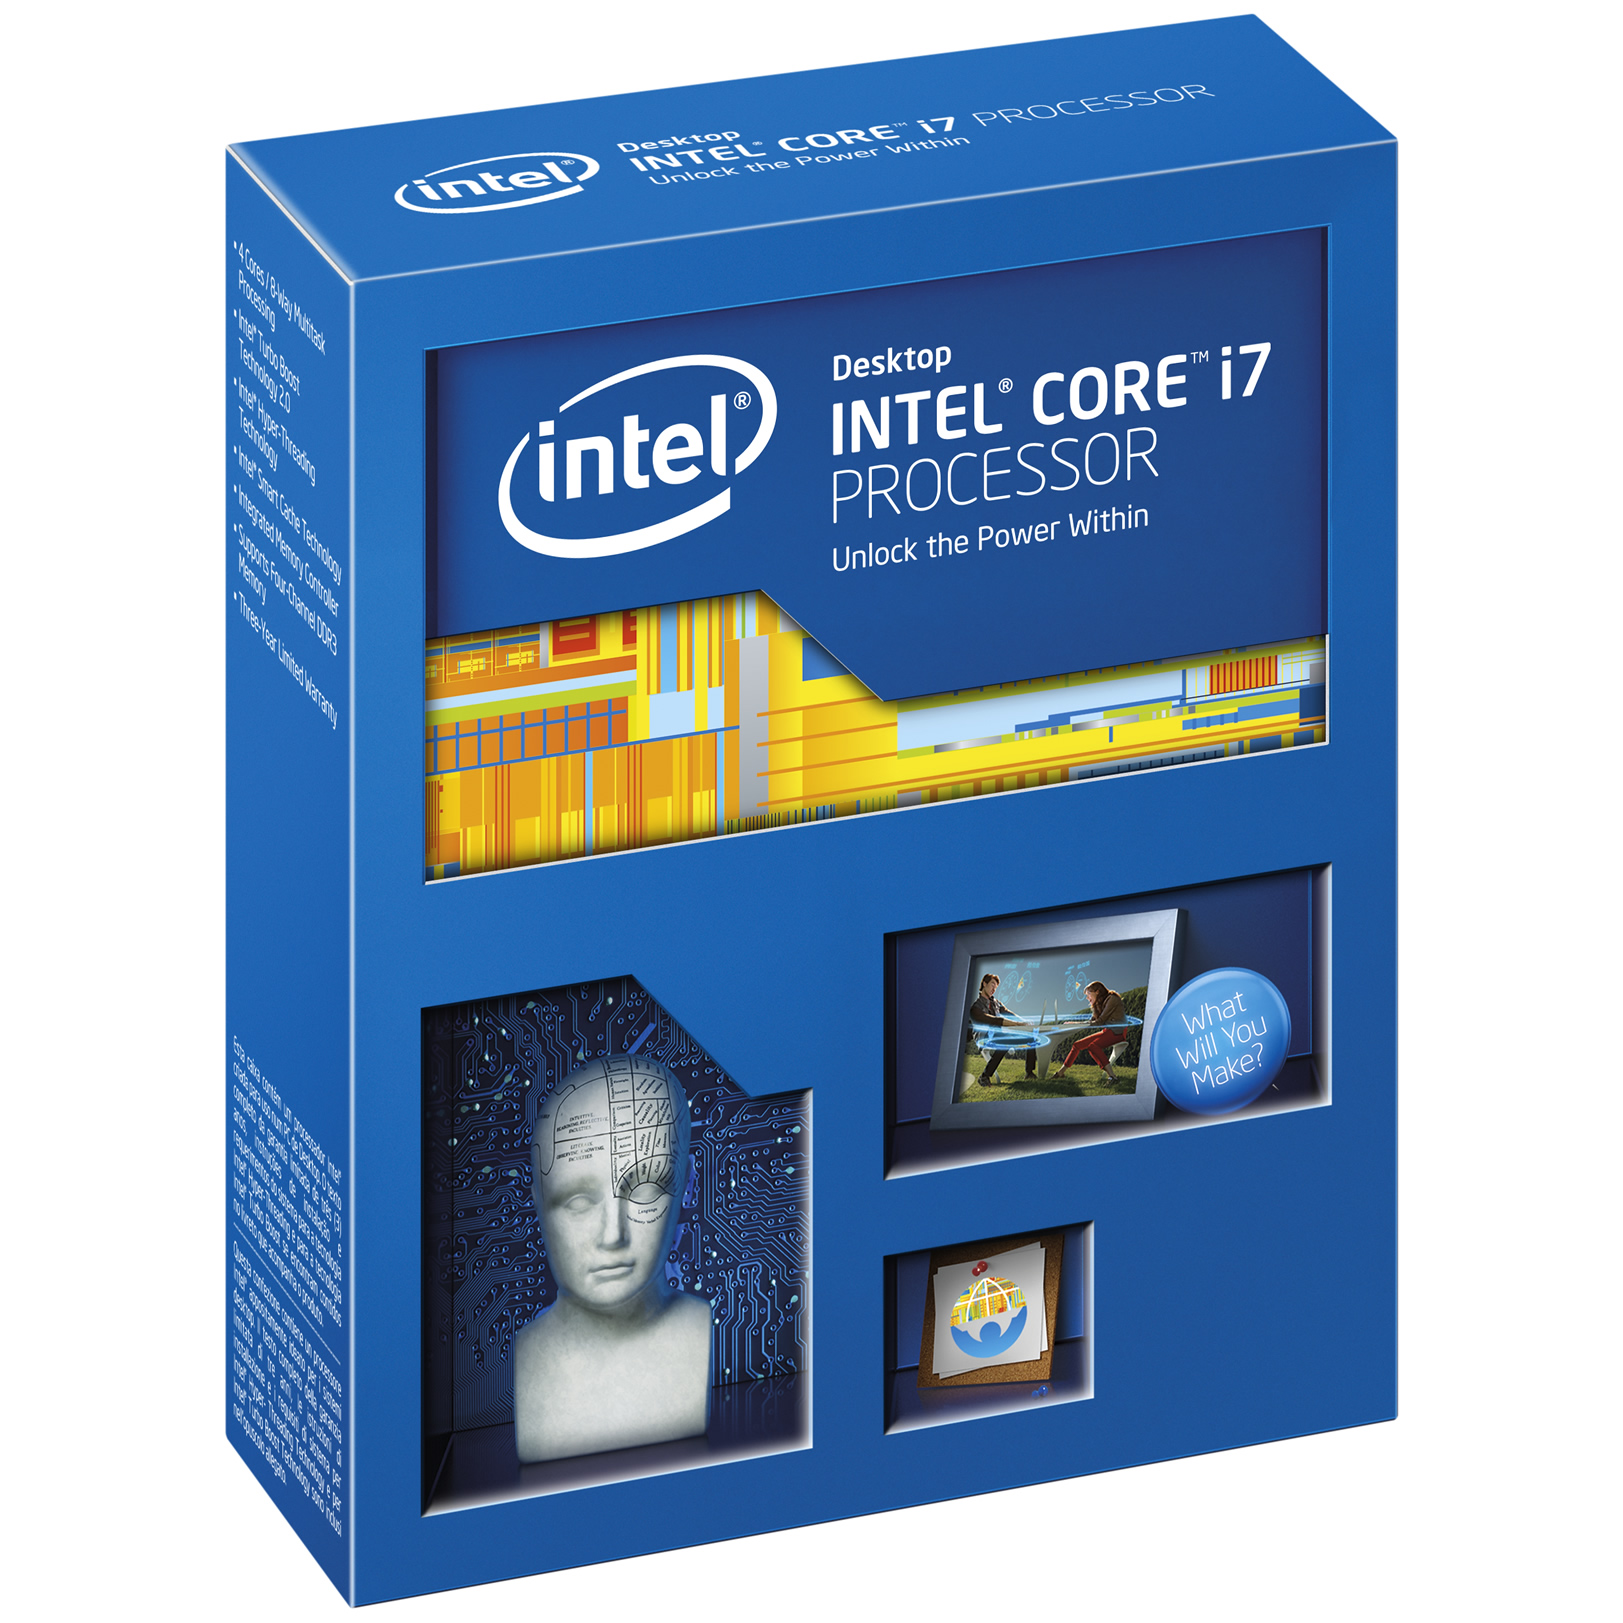 Intel - Intel i7-4820K 3.70GHz (Ivybridge-E) Socket LGA2011 Processor - Retail (BX8